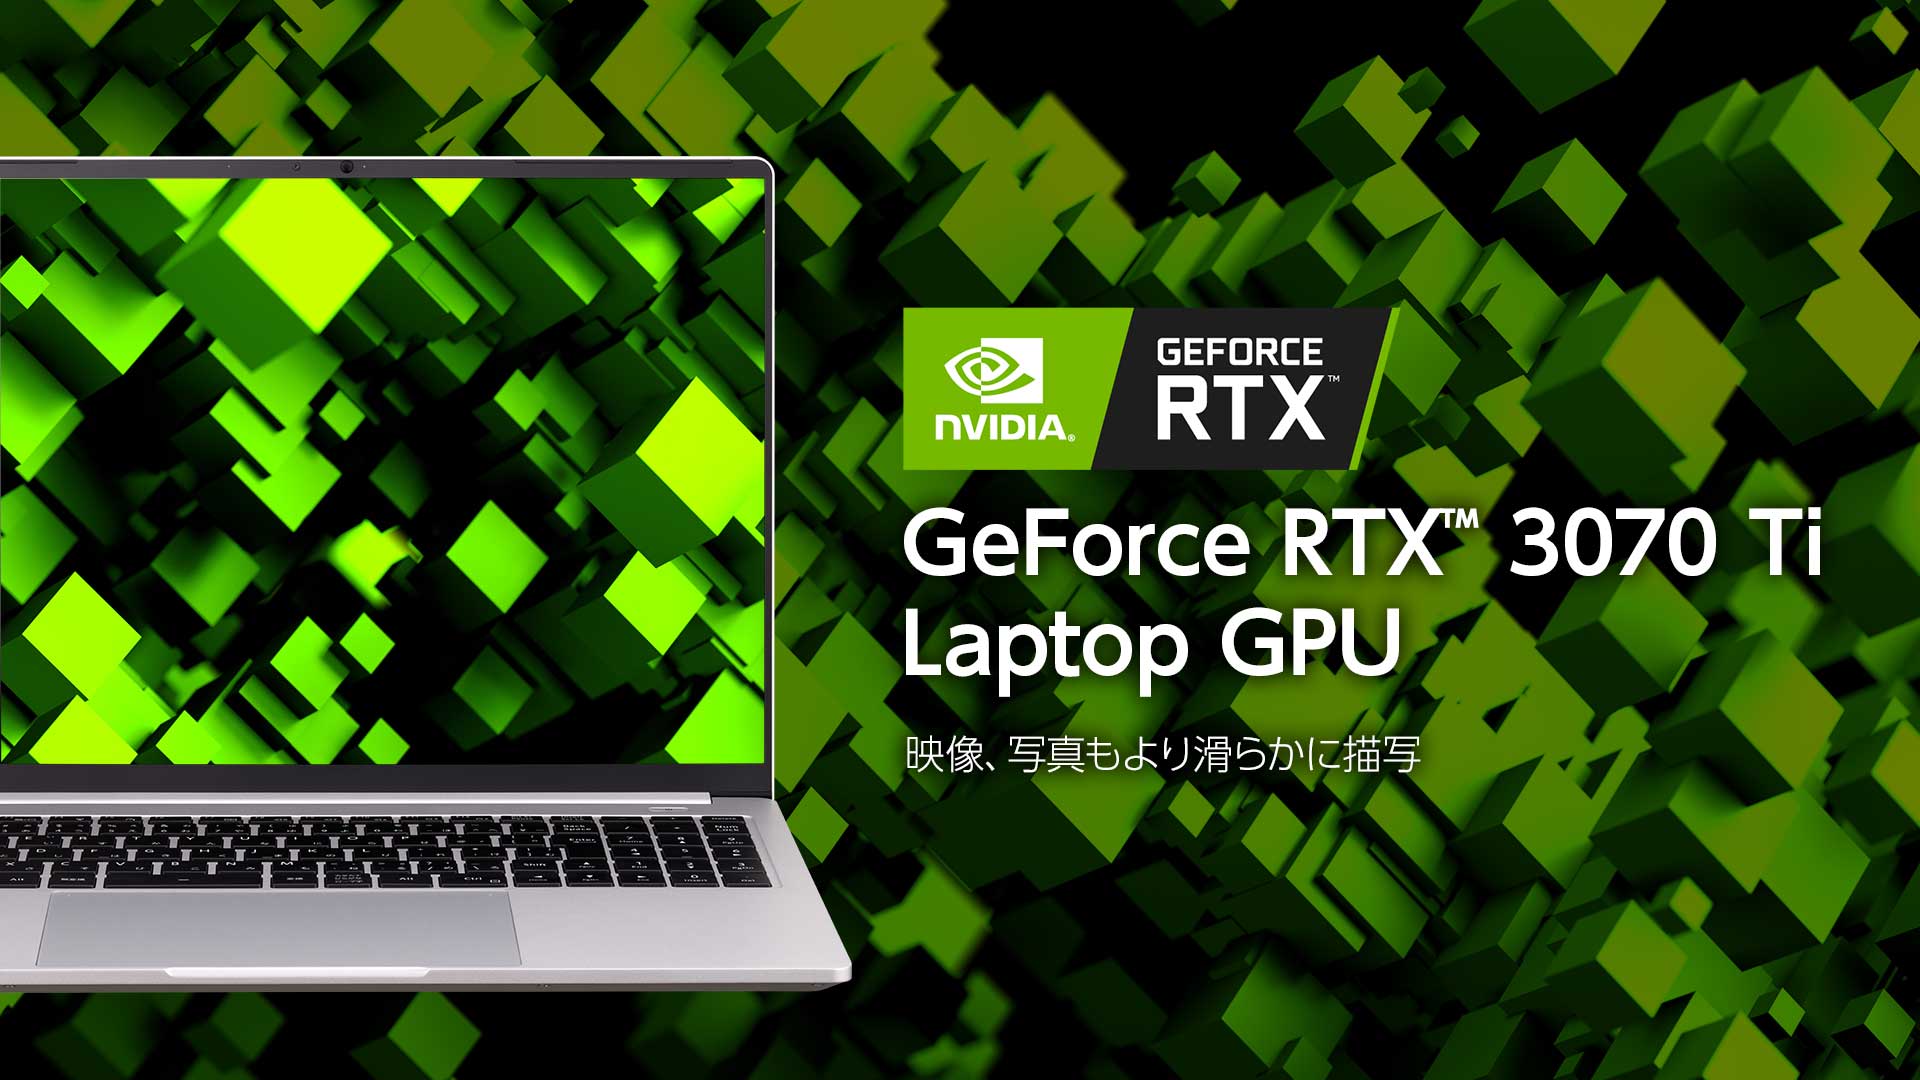 NVIDIA GeForce RTX 3070 Ti Laptop GPU